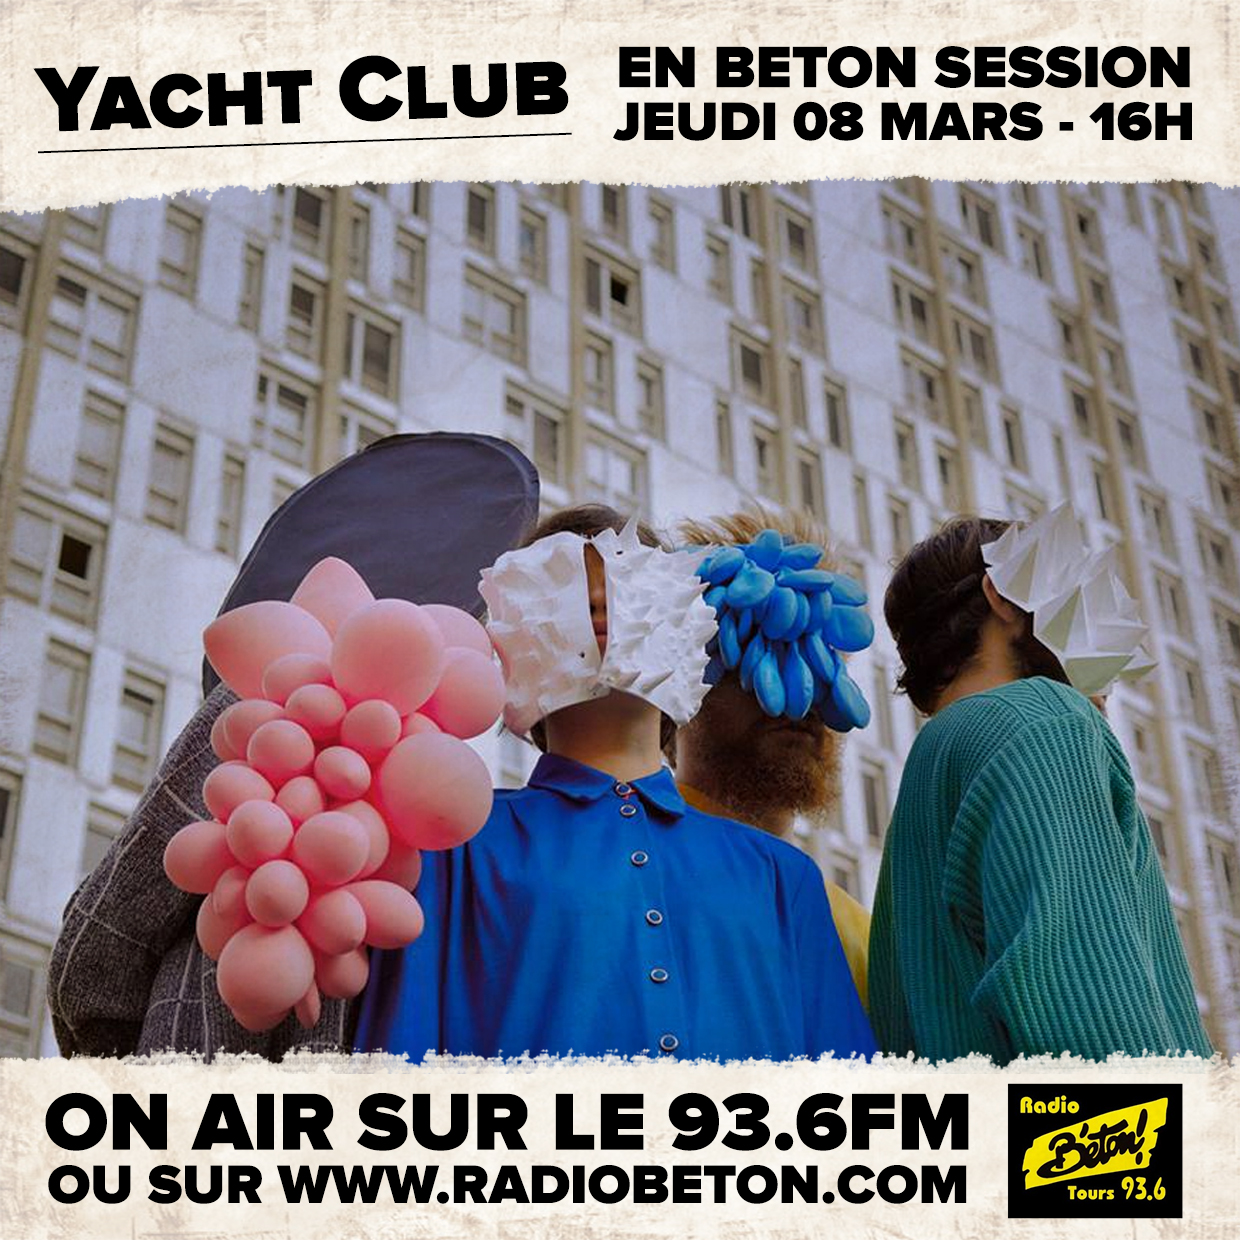 Béton Session – Yacht Club